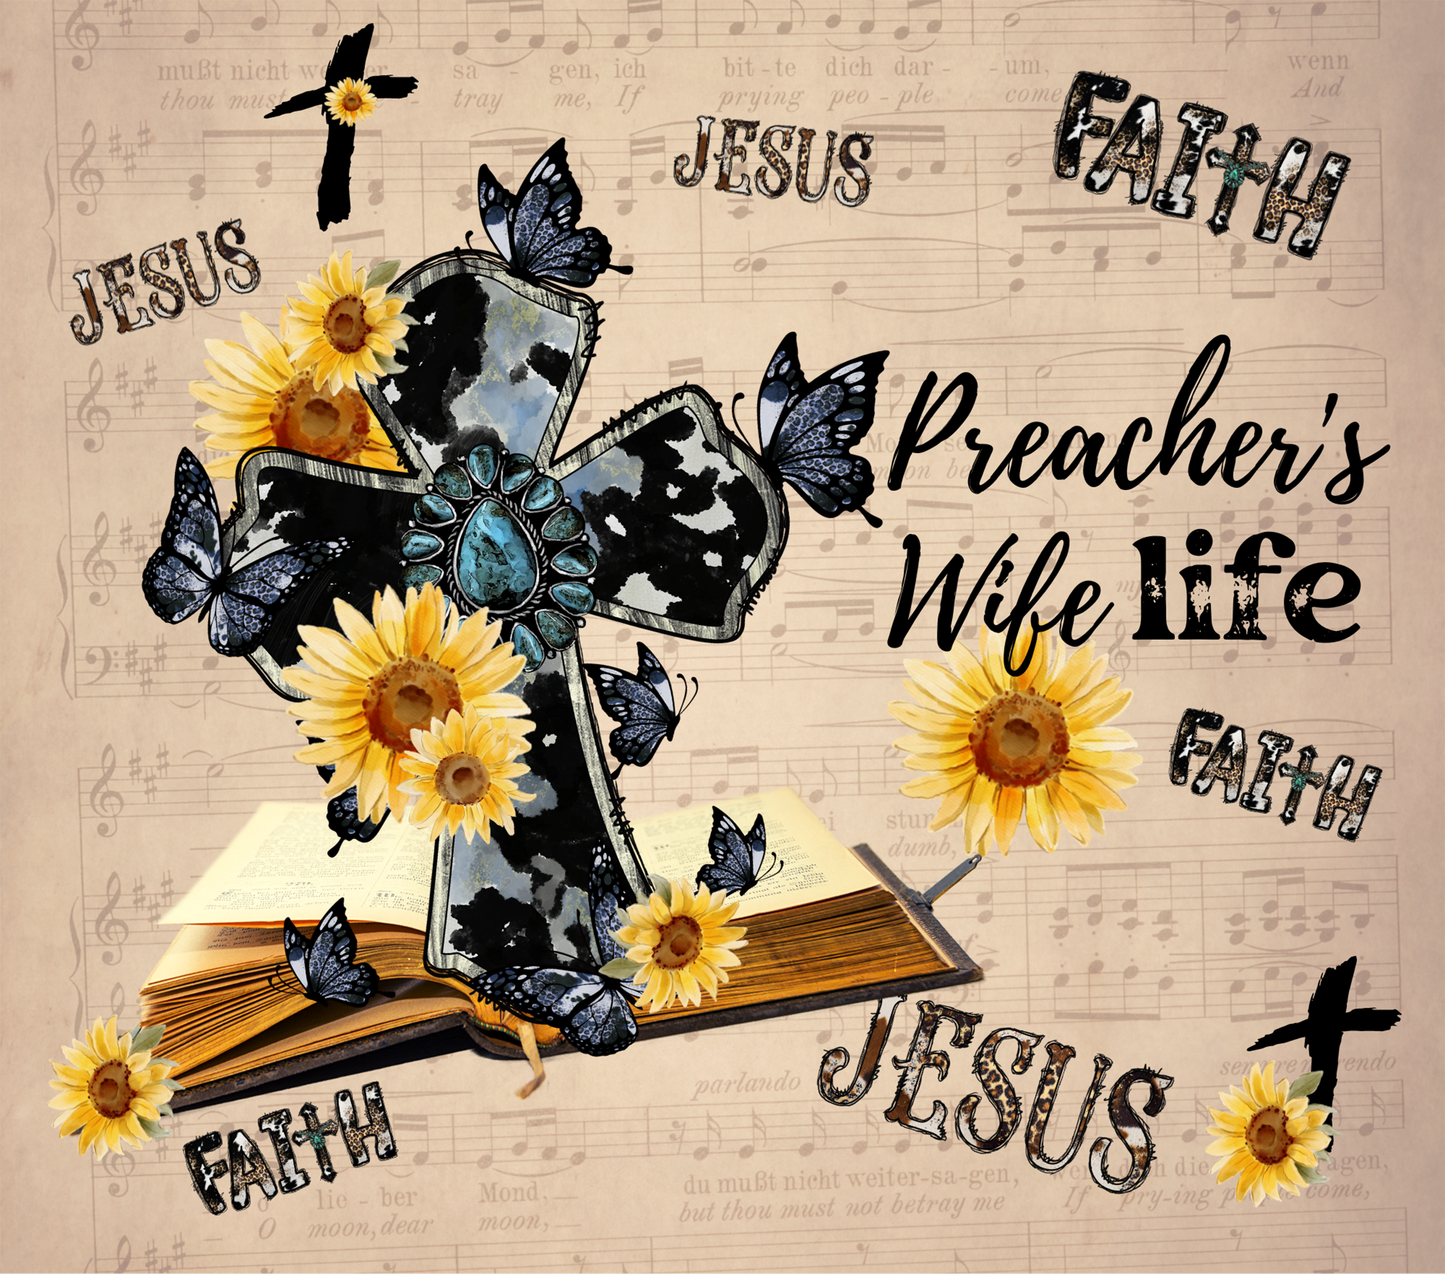 Preachers Wife Life 2 - 20 Oz Sublimation Transfer